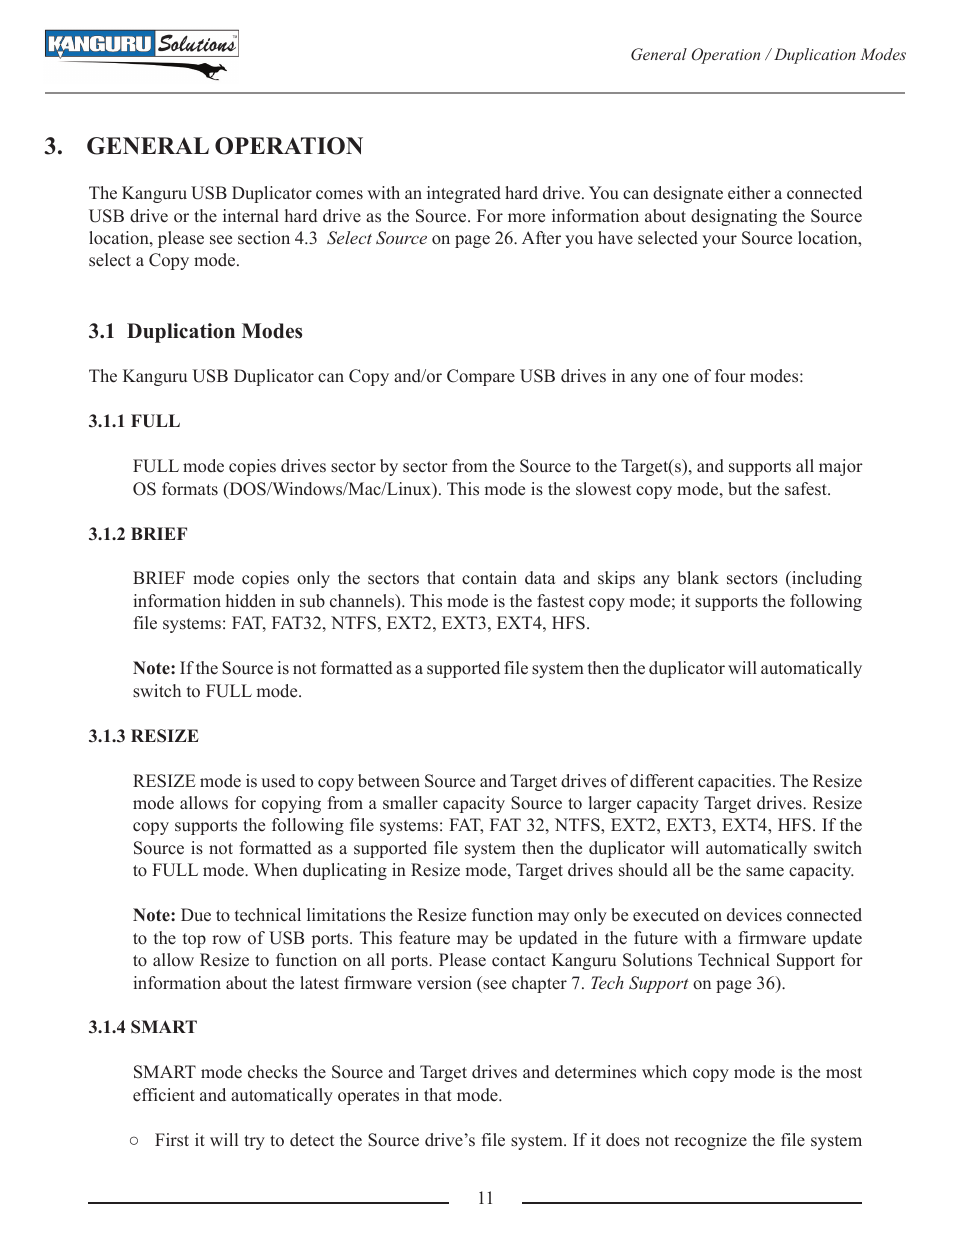 General operation | Kanguru U2D User Manual | Page 13 / 40